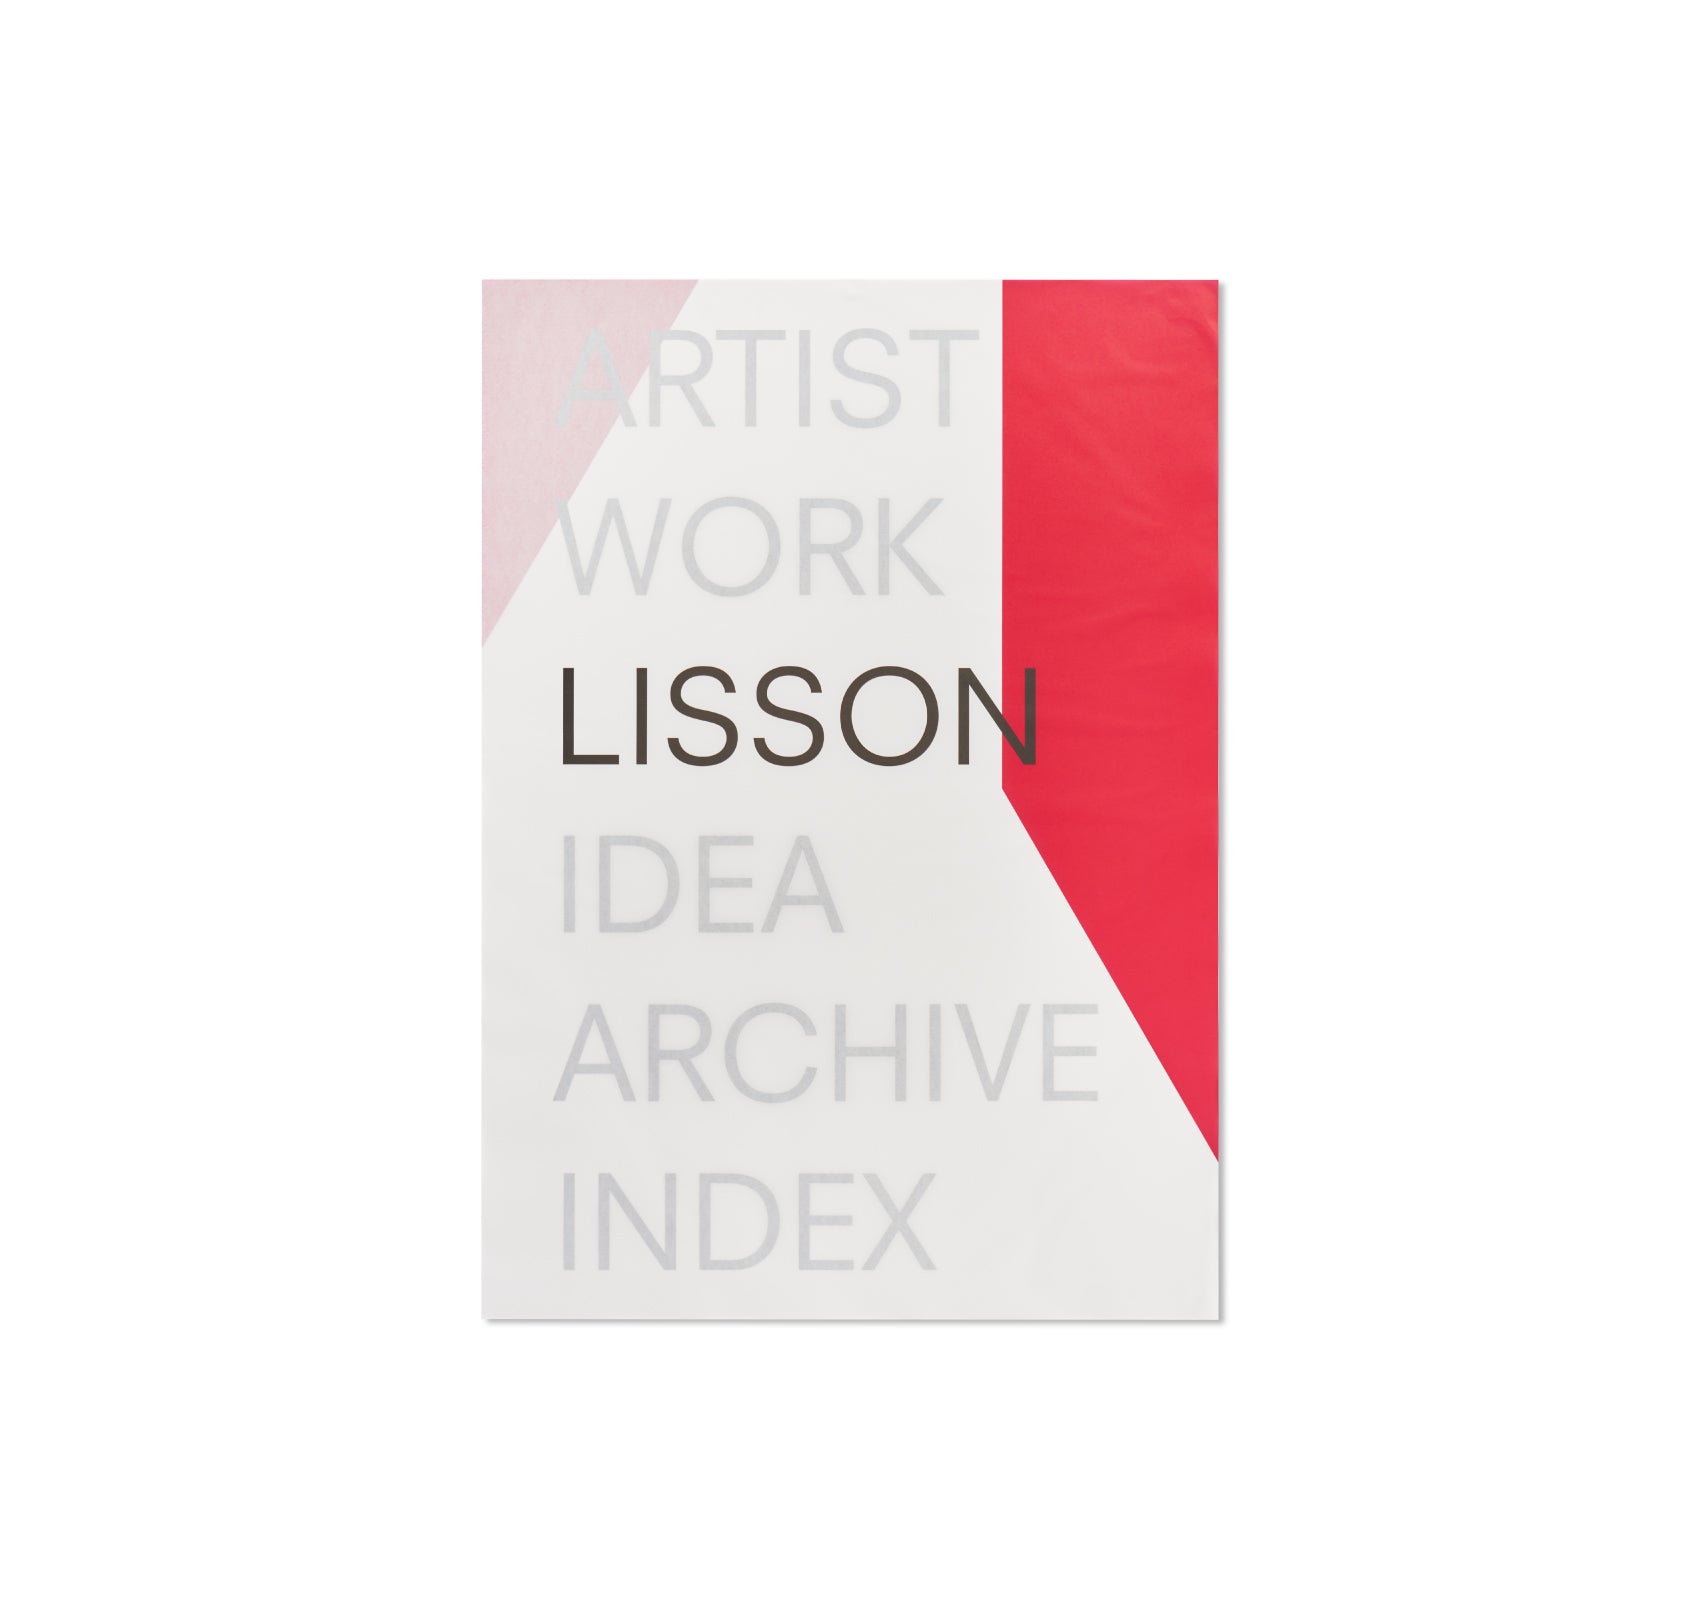 ARTIST | WORK | LISSON POSTER